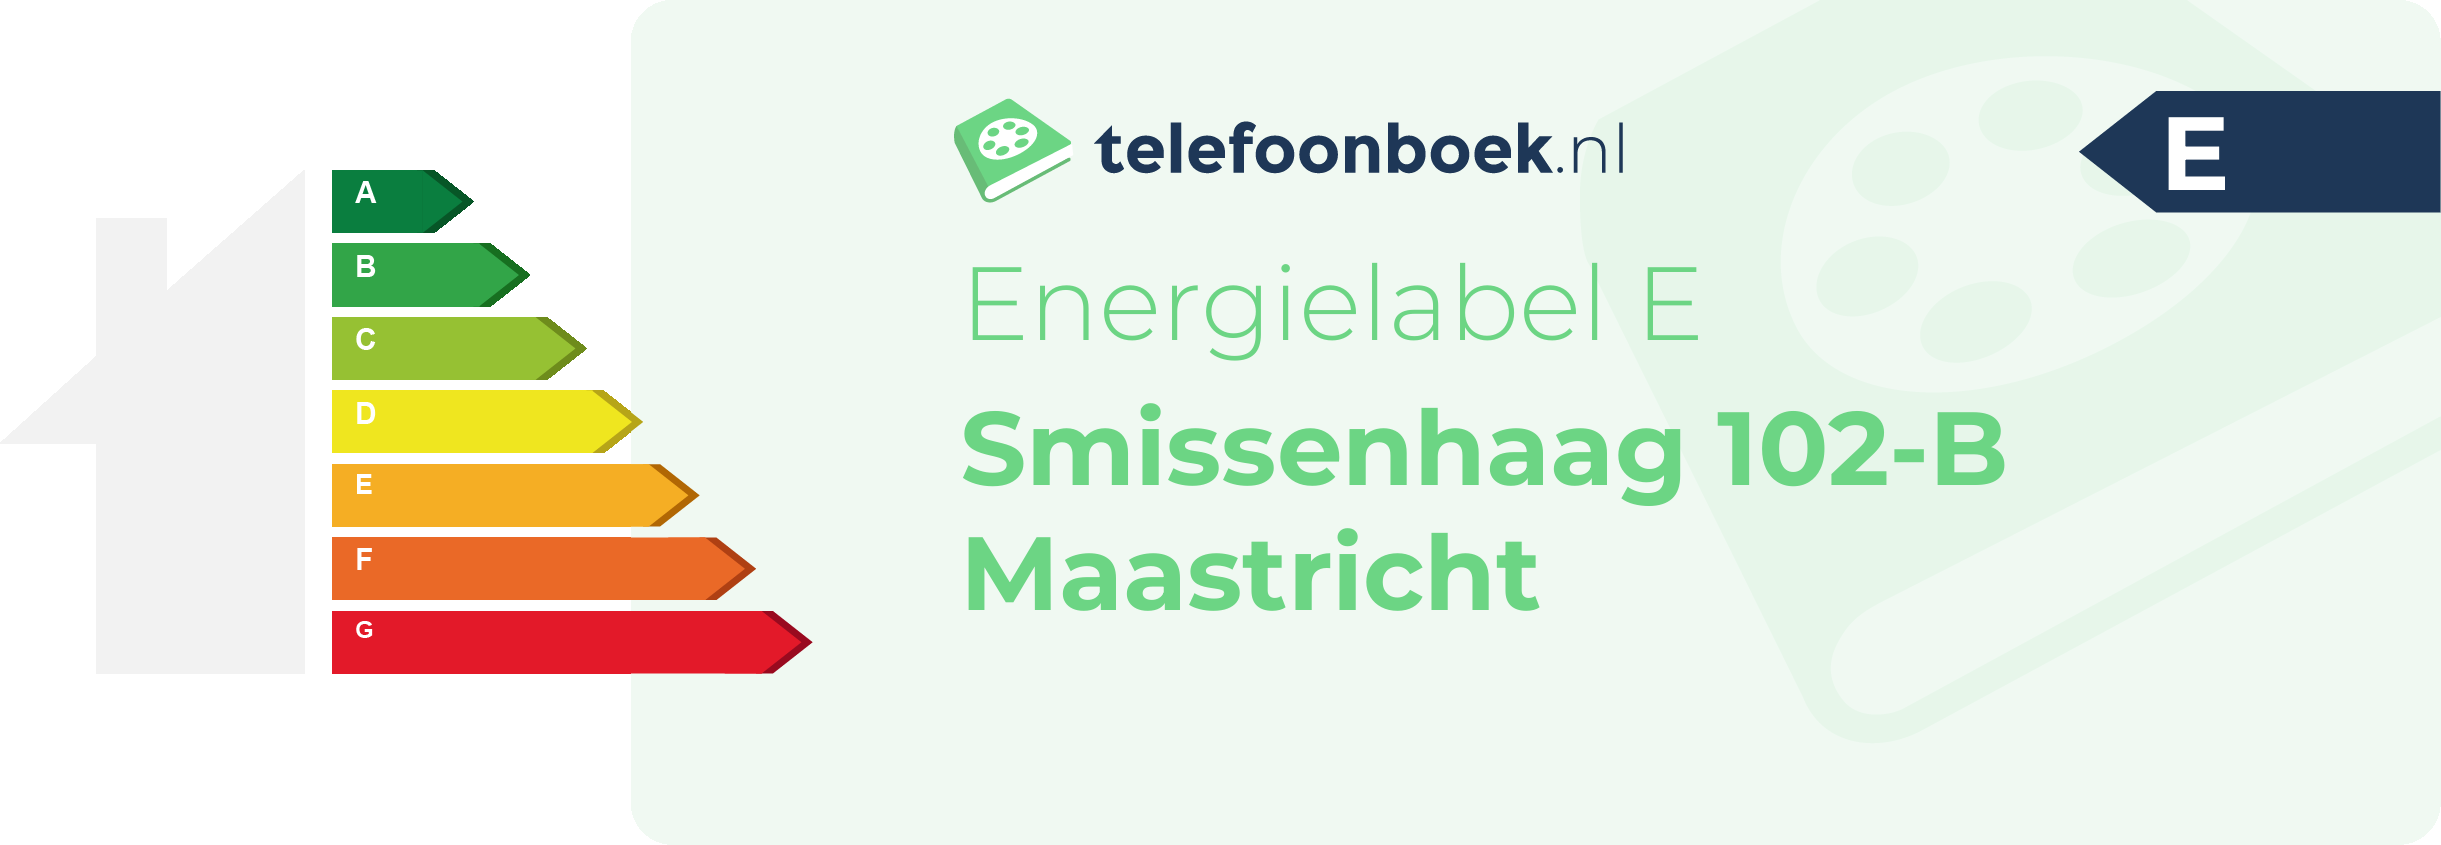 Energielabel Smissenhaag 102-B Maastricht